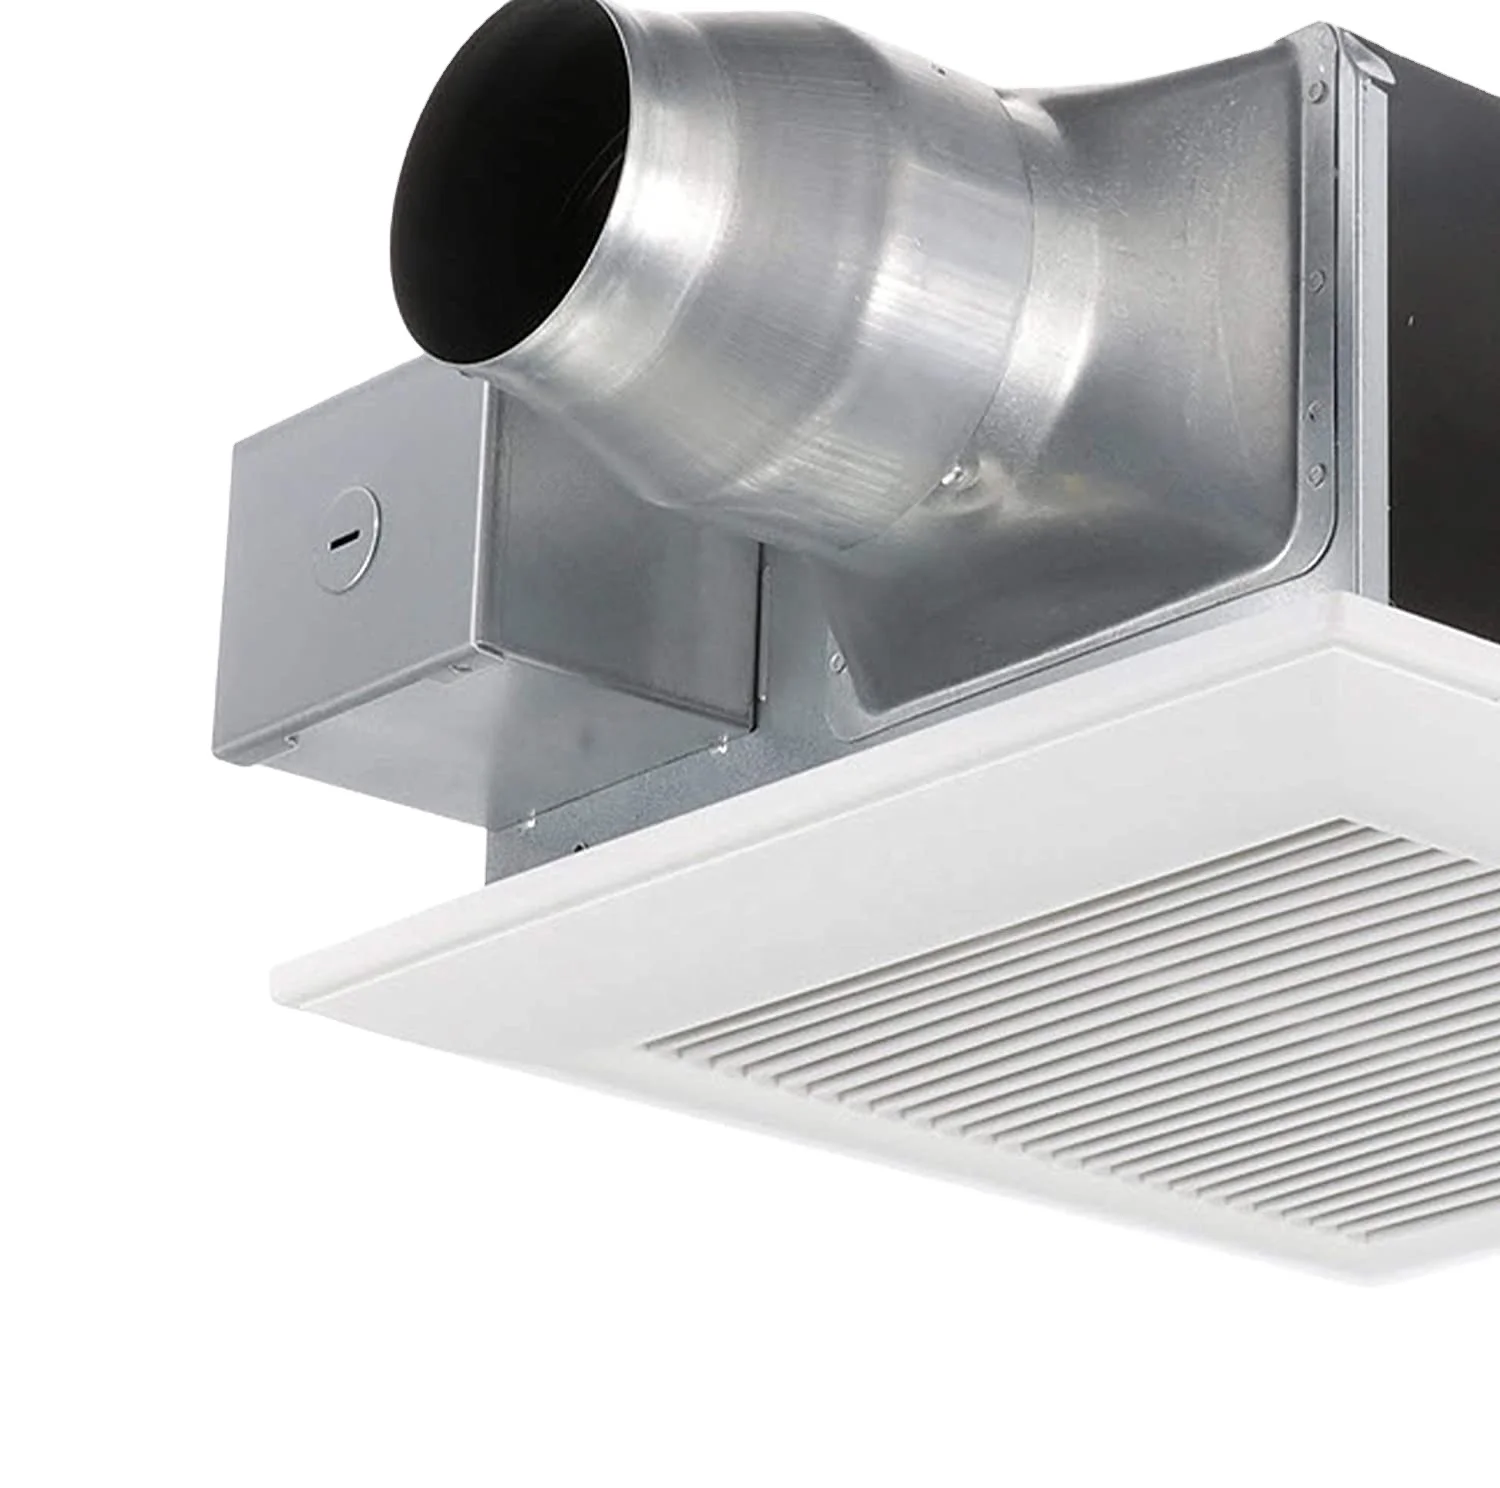 FV 0811VF5 full metal case ceiling duct pipe tubular window mount bathroom ventilation exhaust fan 80 or 110 CFM (1600394910320)